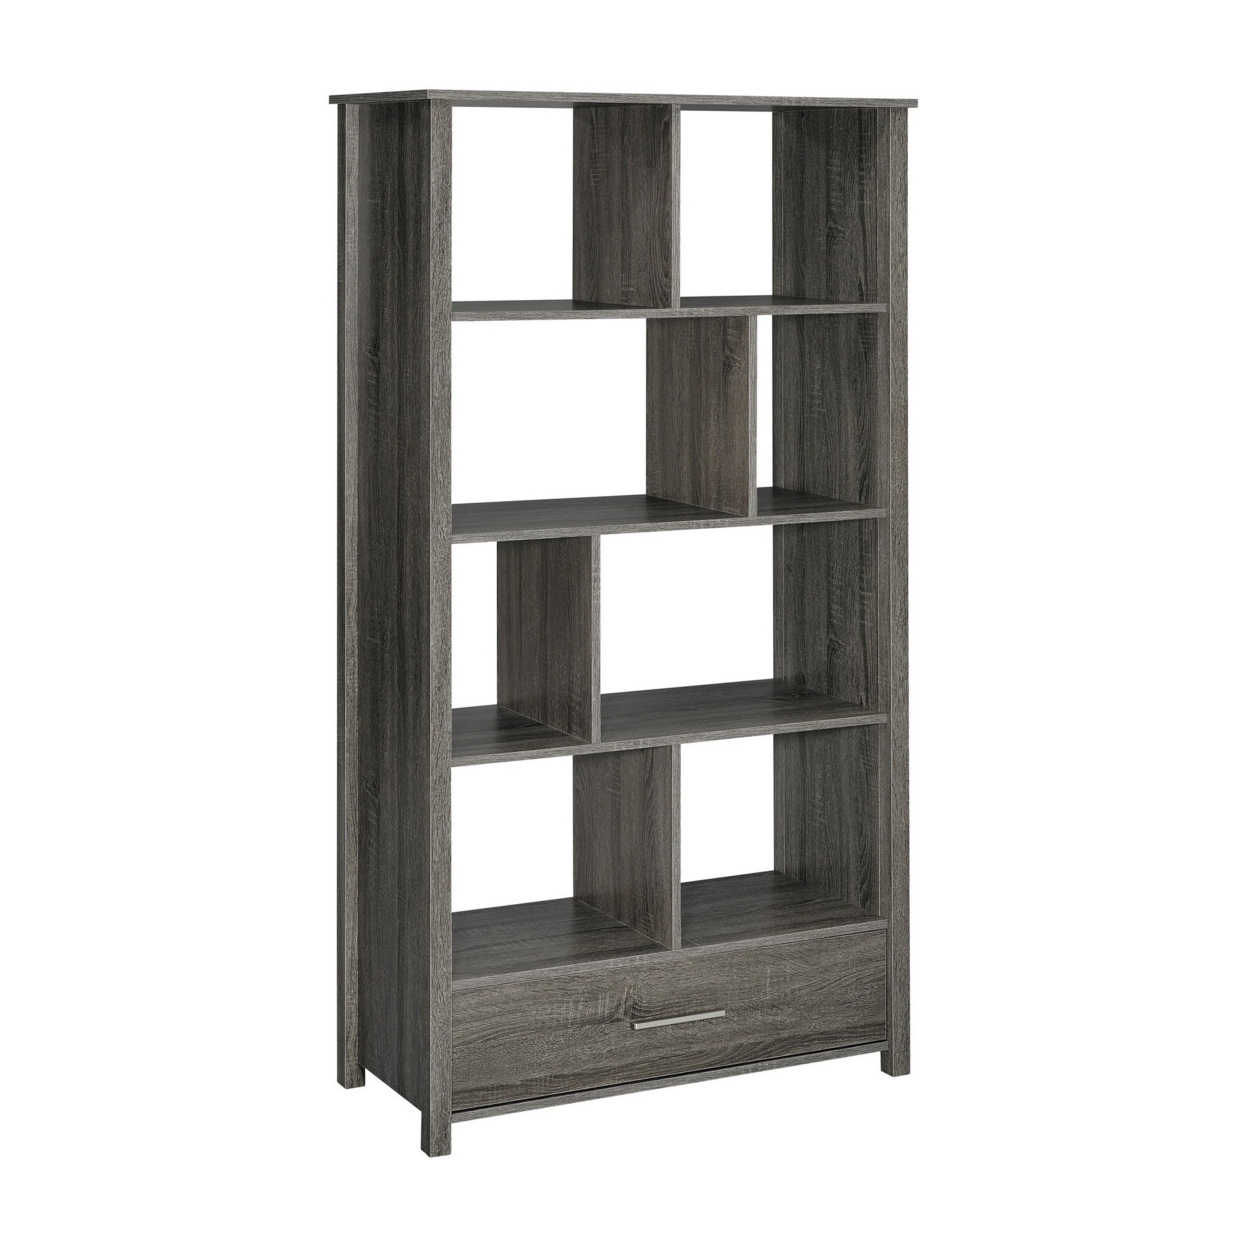 Wim 68 Inch Geometric Bookcase Etagere With 8 Shelves, Weathered Gray- Saltoro Sherpi